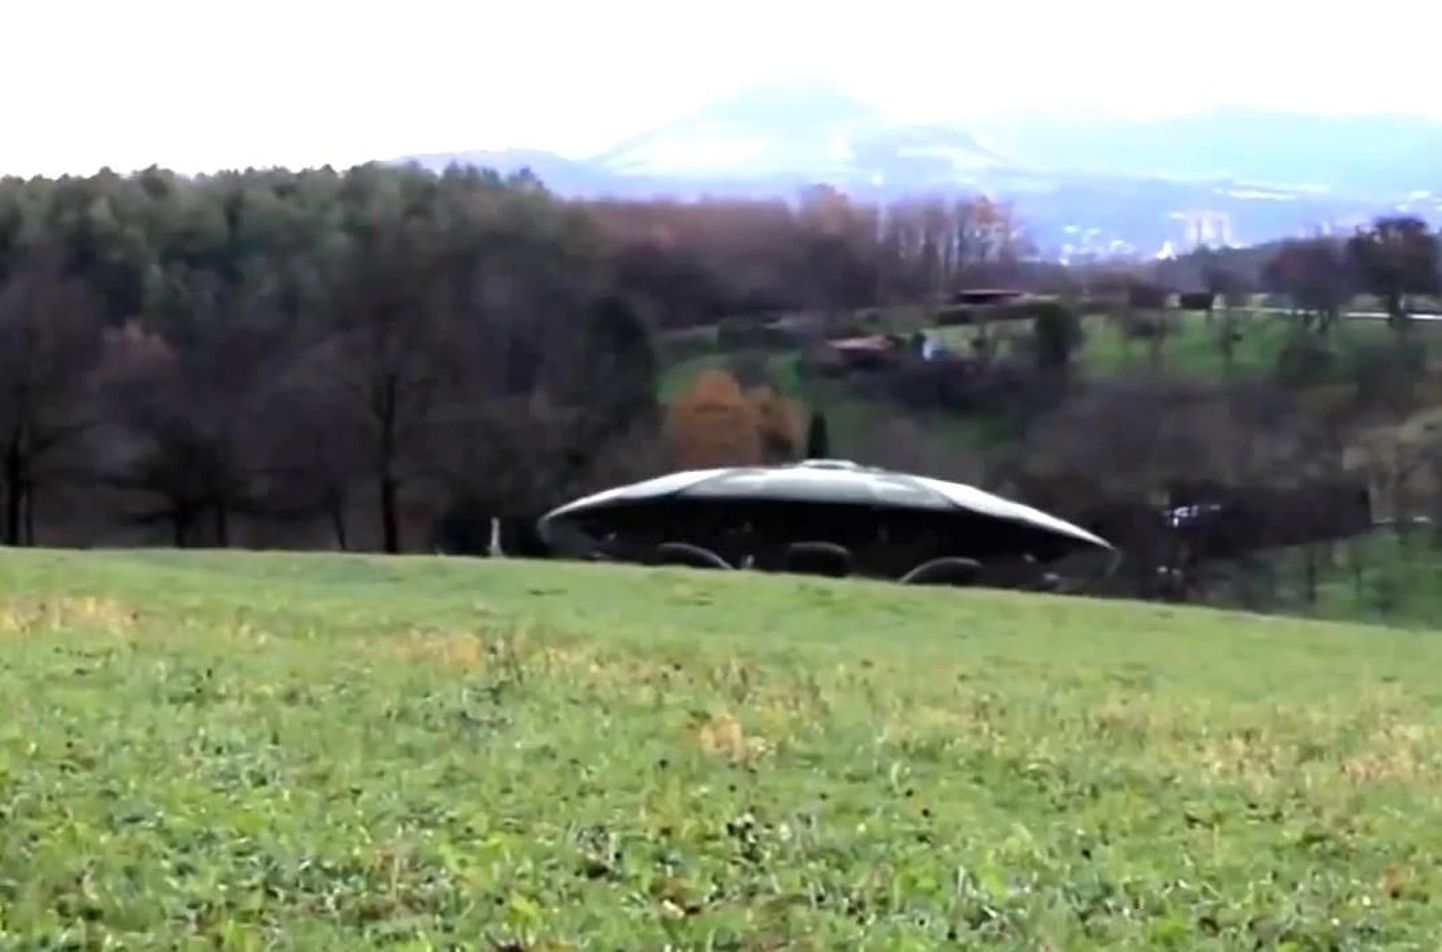 UFOd maandusid Venemaale